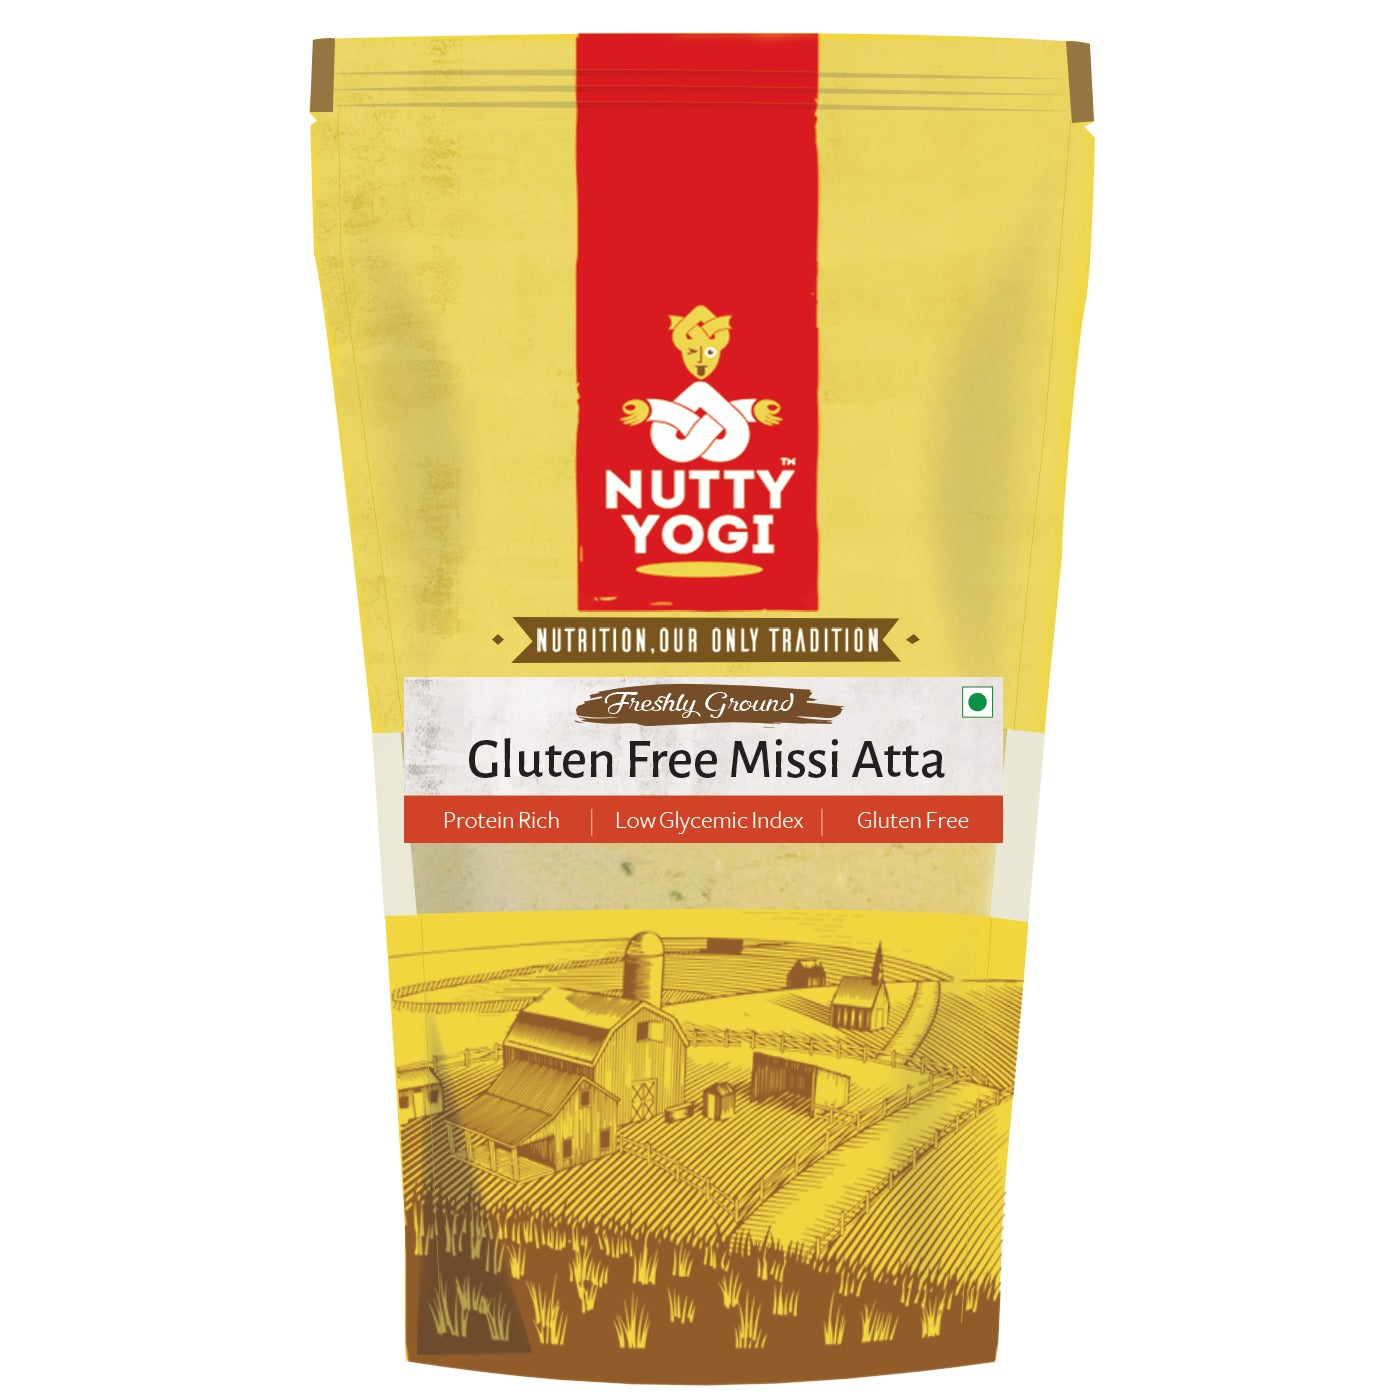 Nutty Yogi Gluten- Free Multigrain Missi Atta